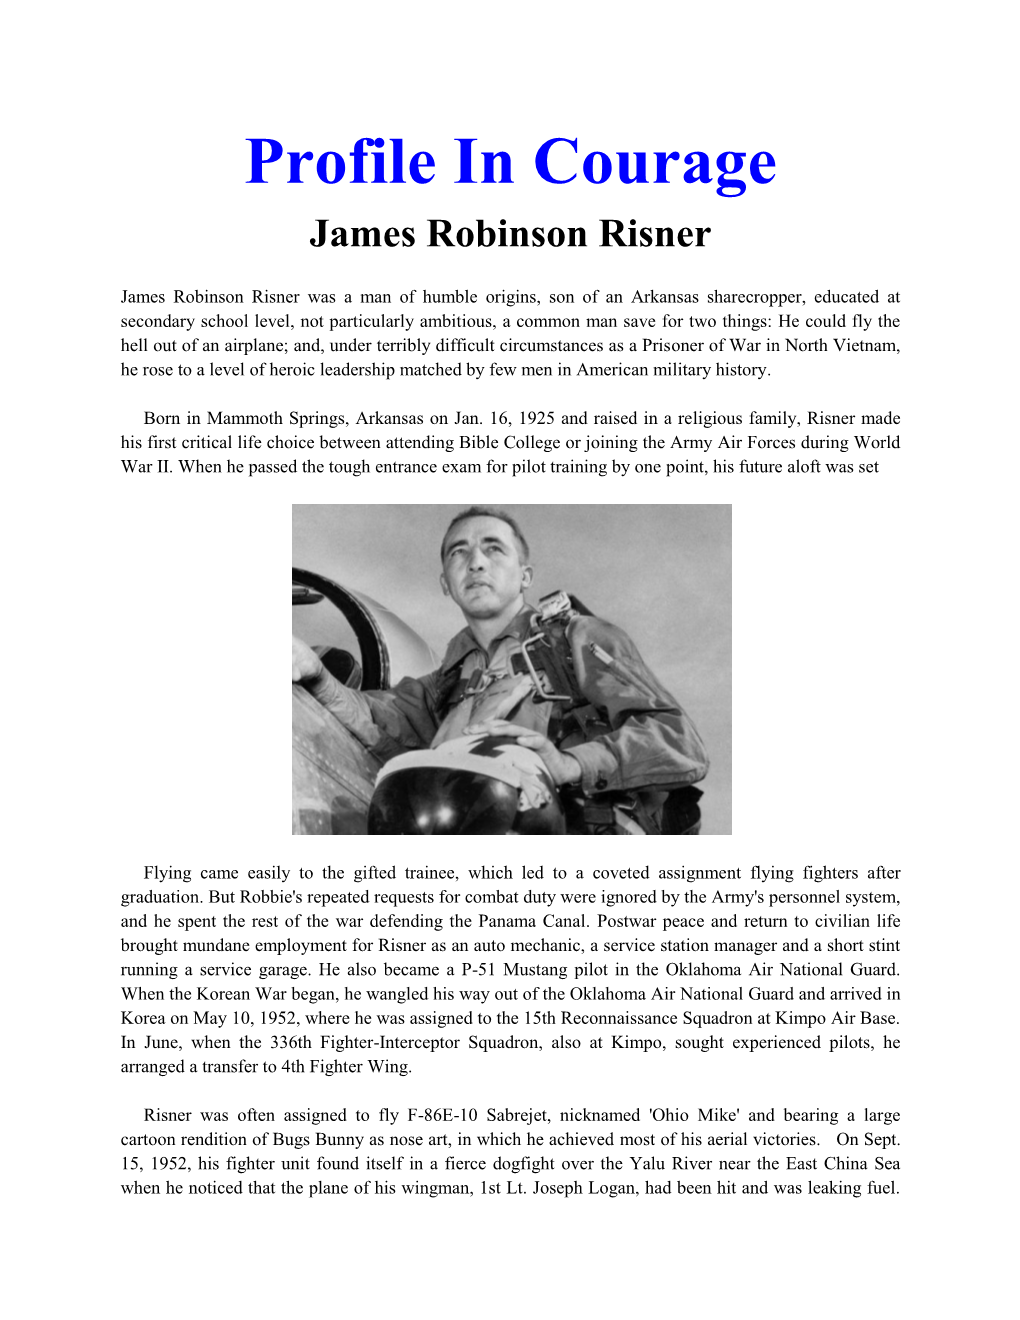 Profile in Courage James Robinson Risner